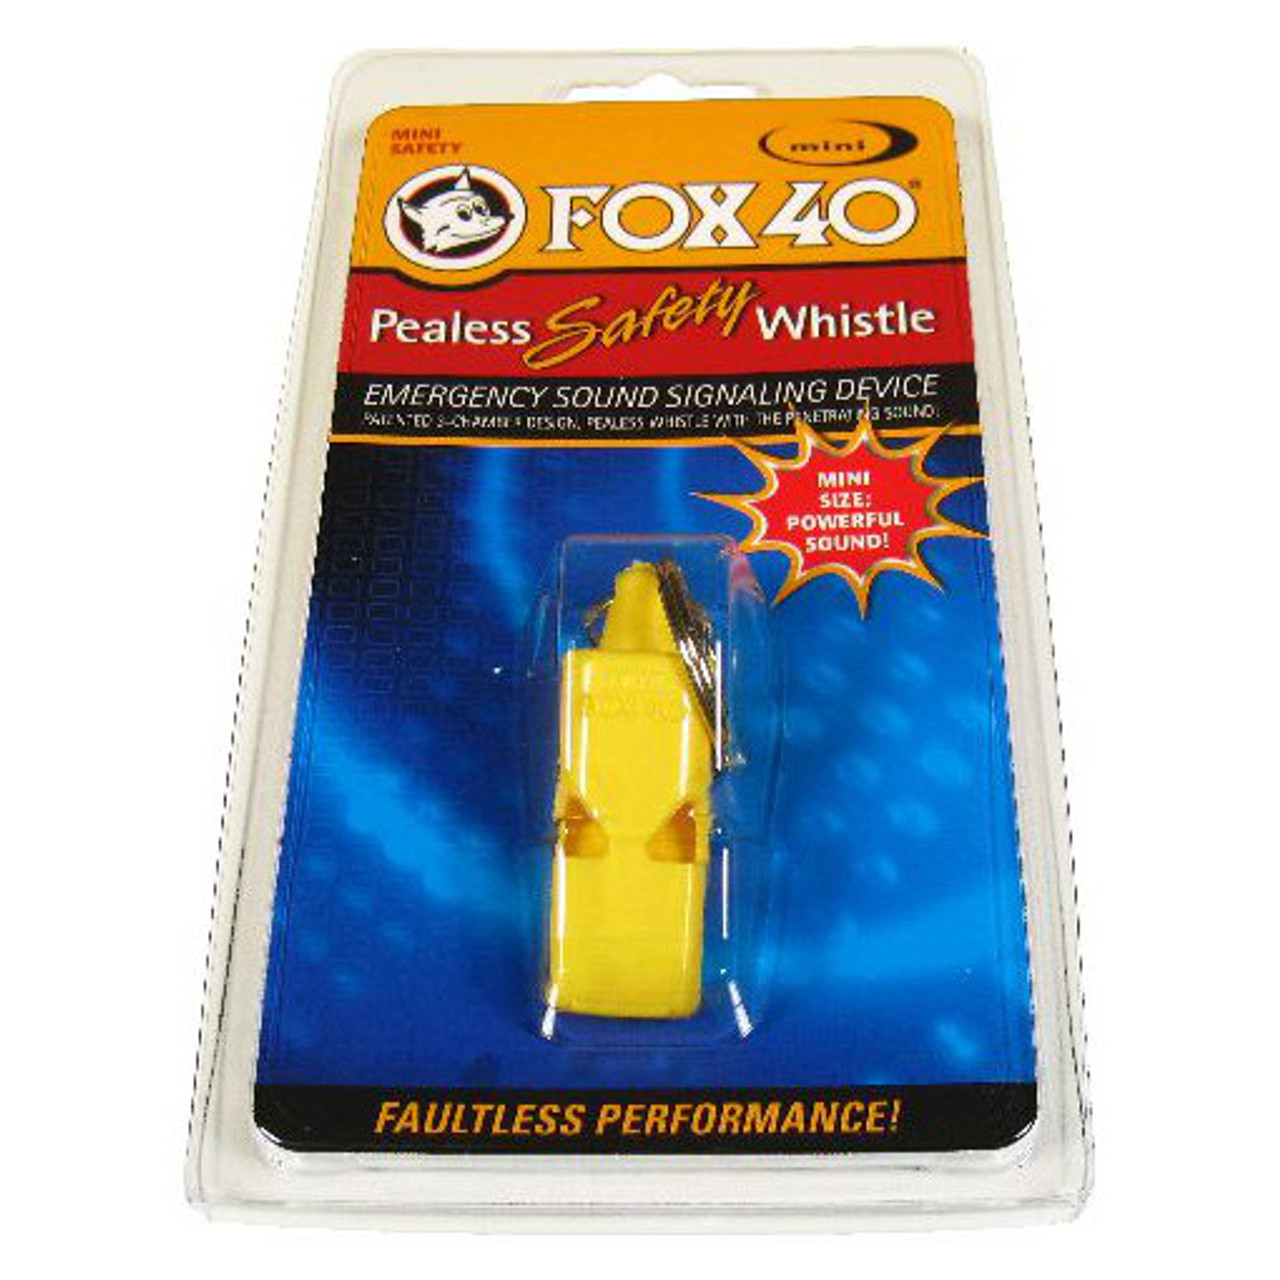 Fox 40 Pealess Whistle